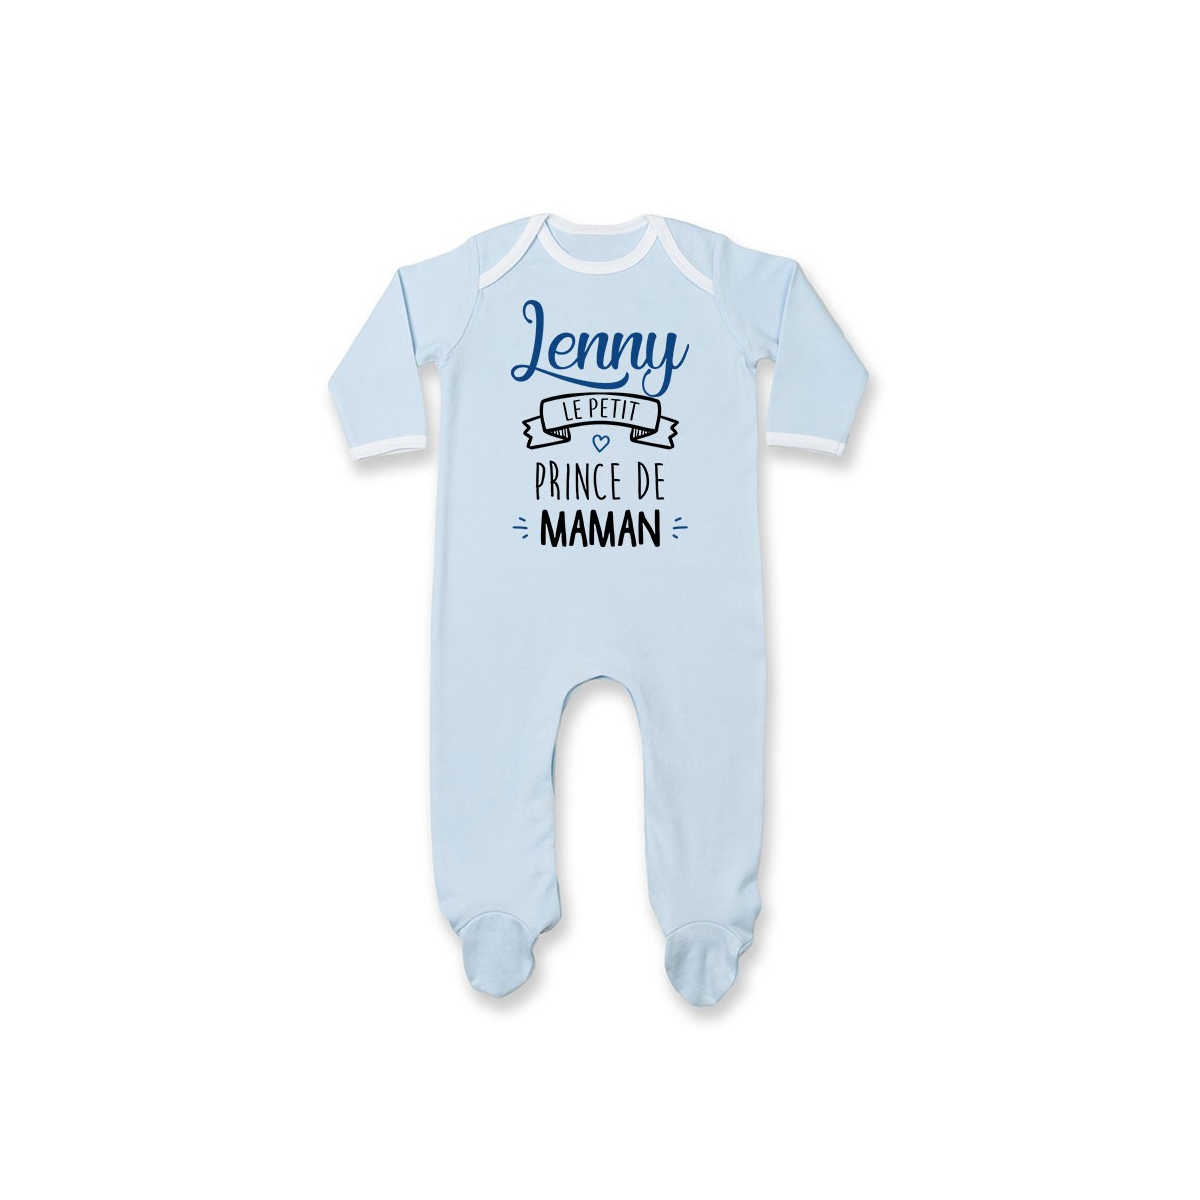 Pyjama bébé personnalisé " prénom " le petit prince de maman